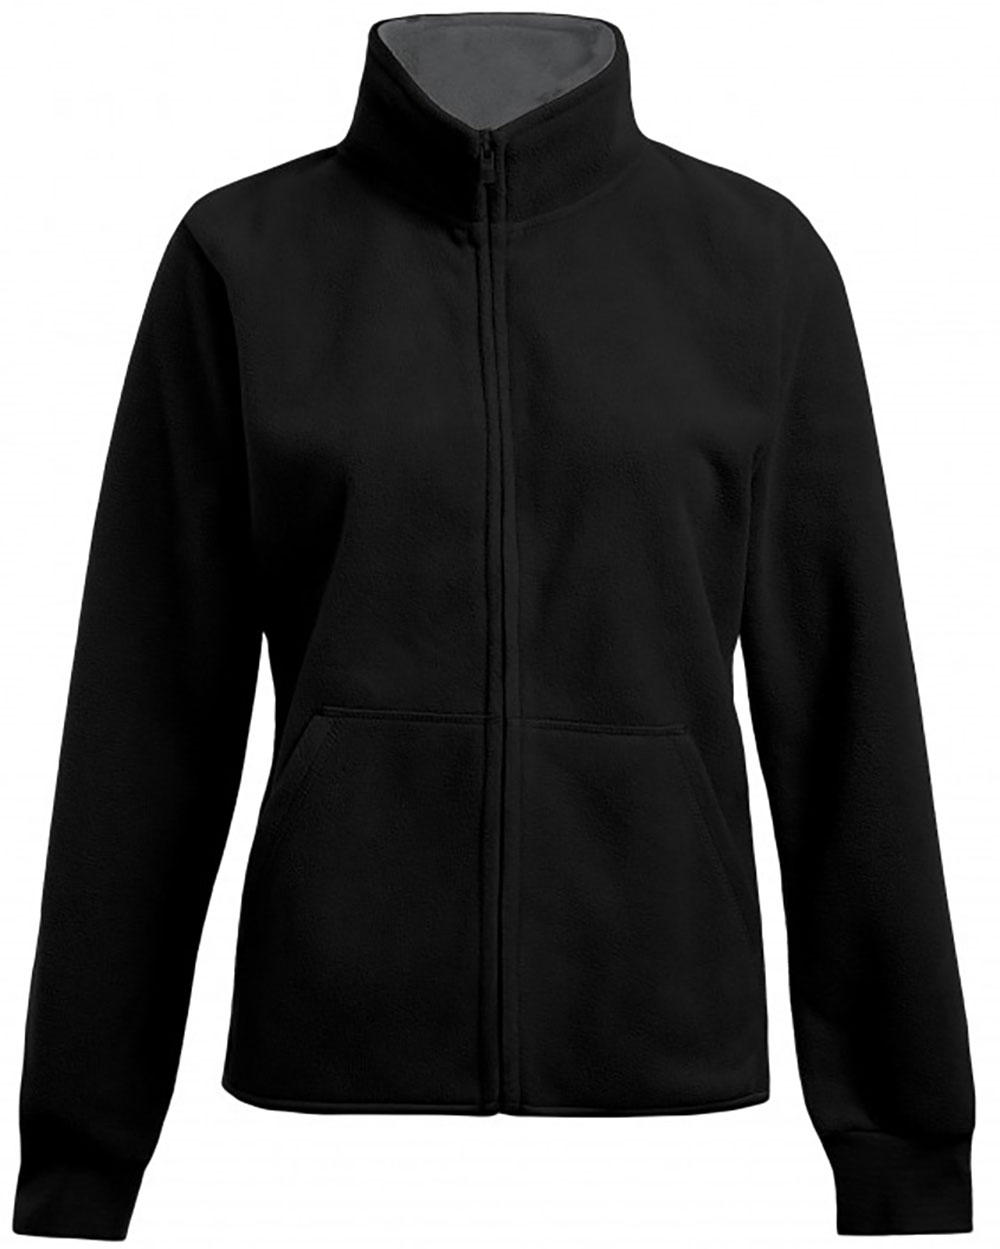 Promodoro Women's Double Fleece Jacket 7985 / black